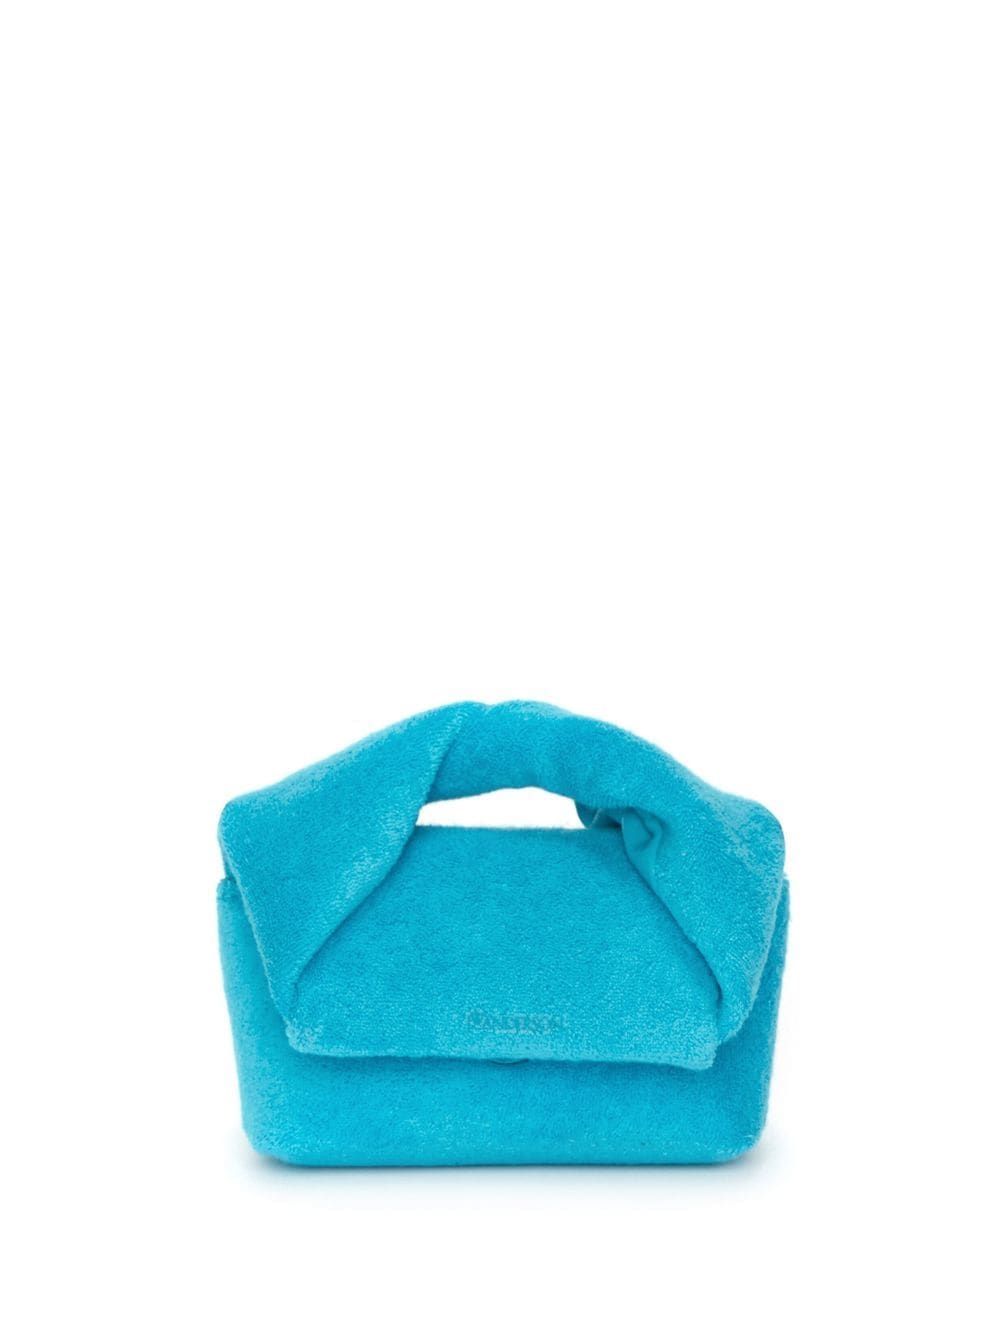 JW Anderson mini Twister Terry bag - Blue